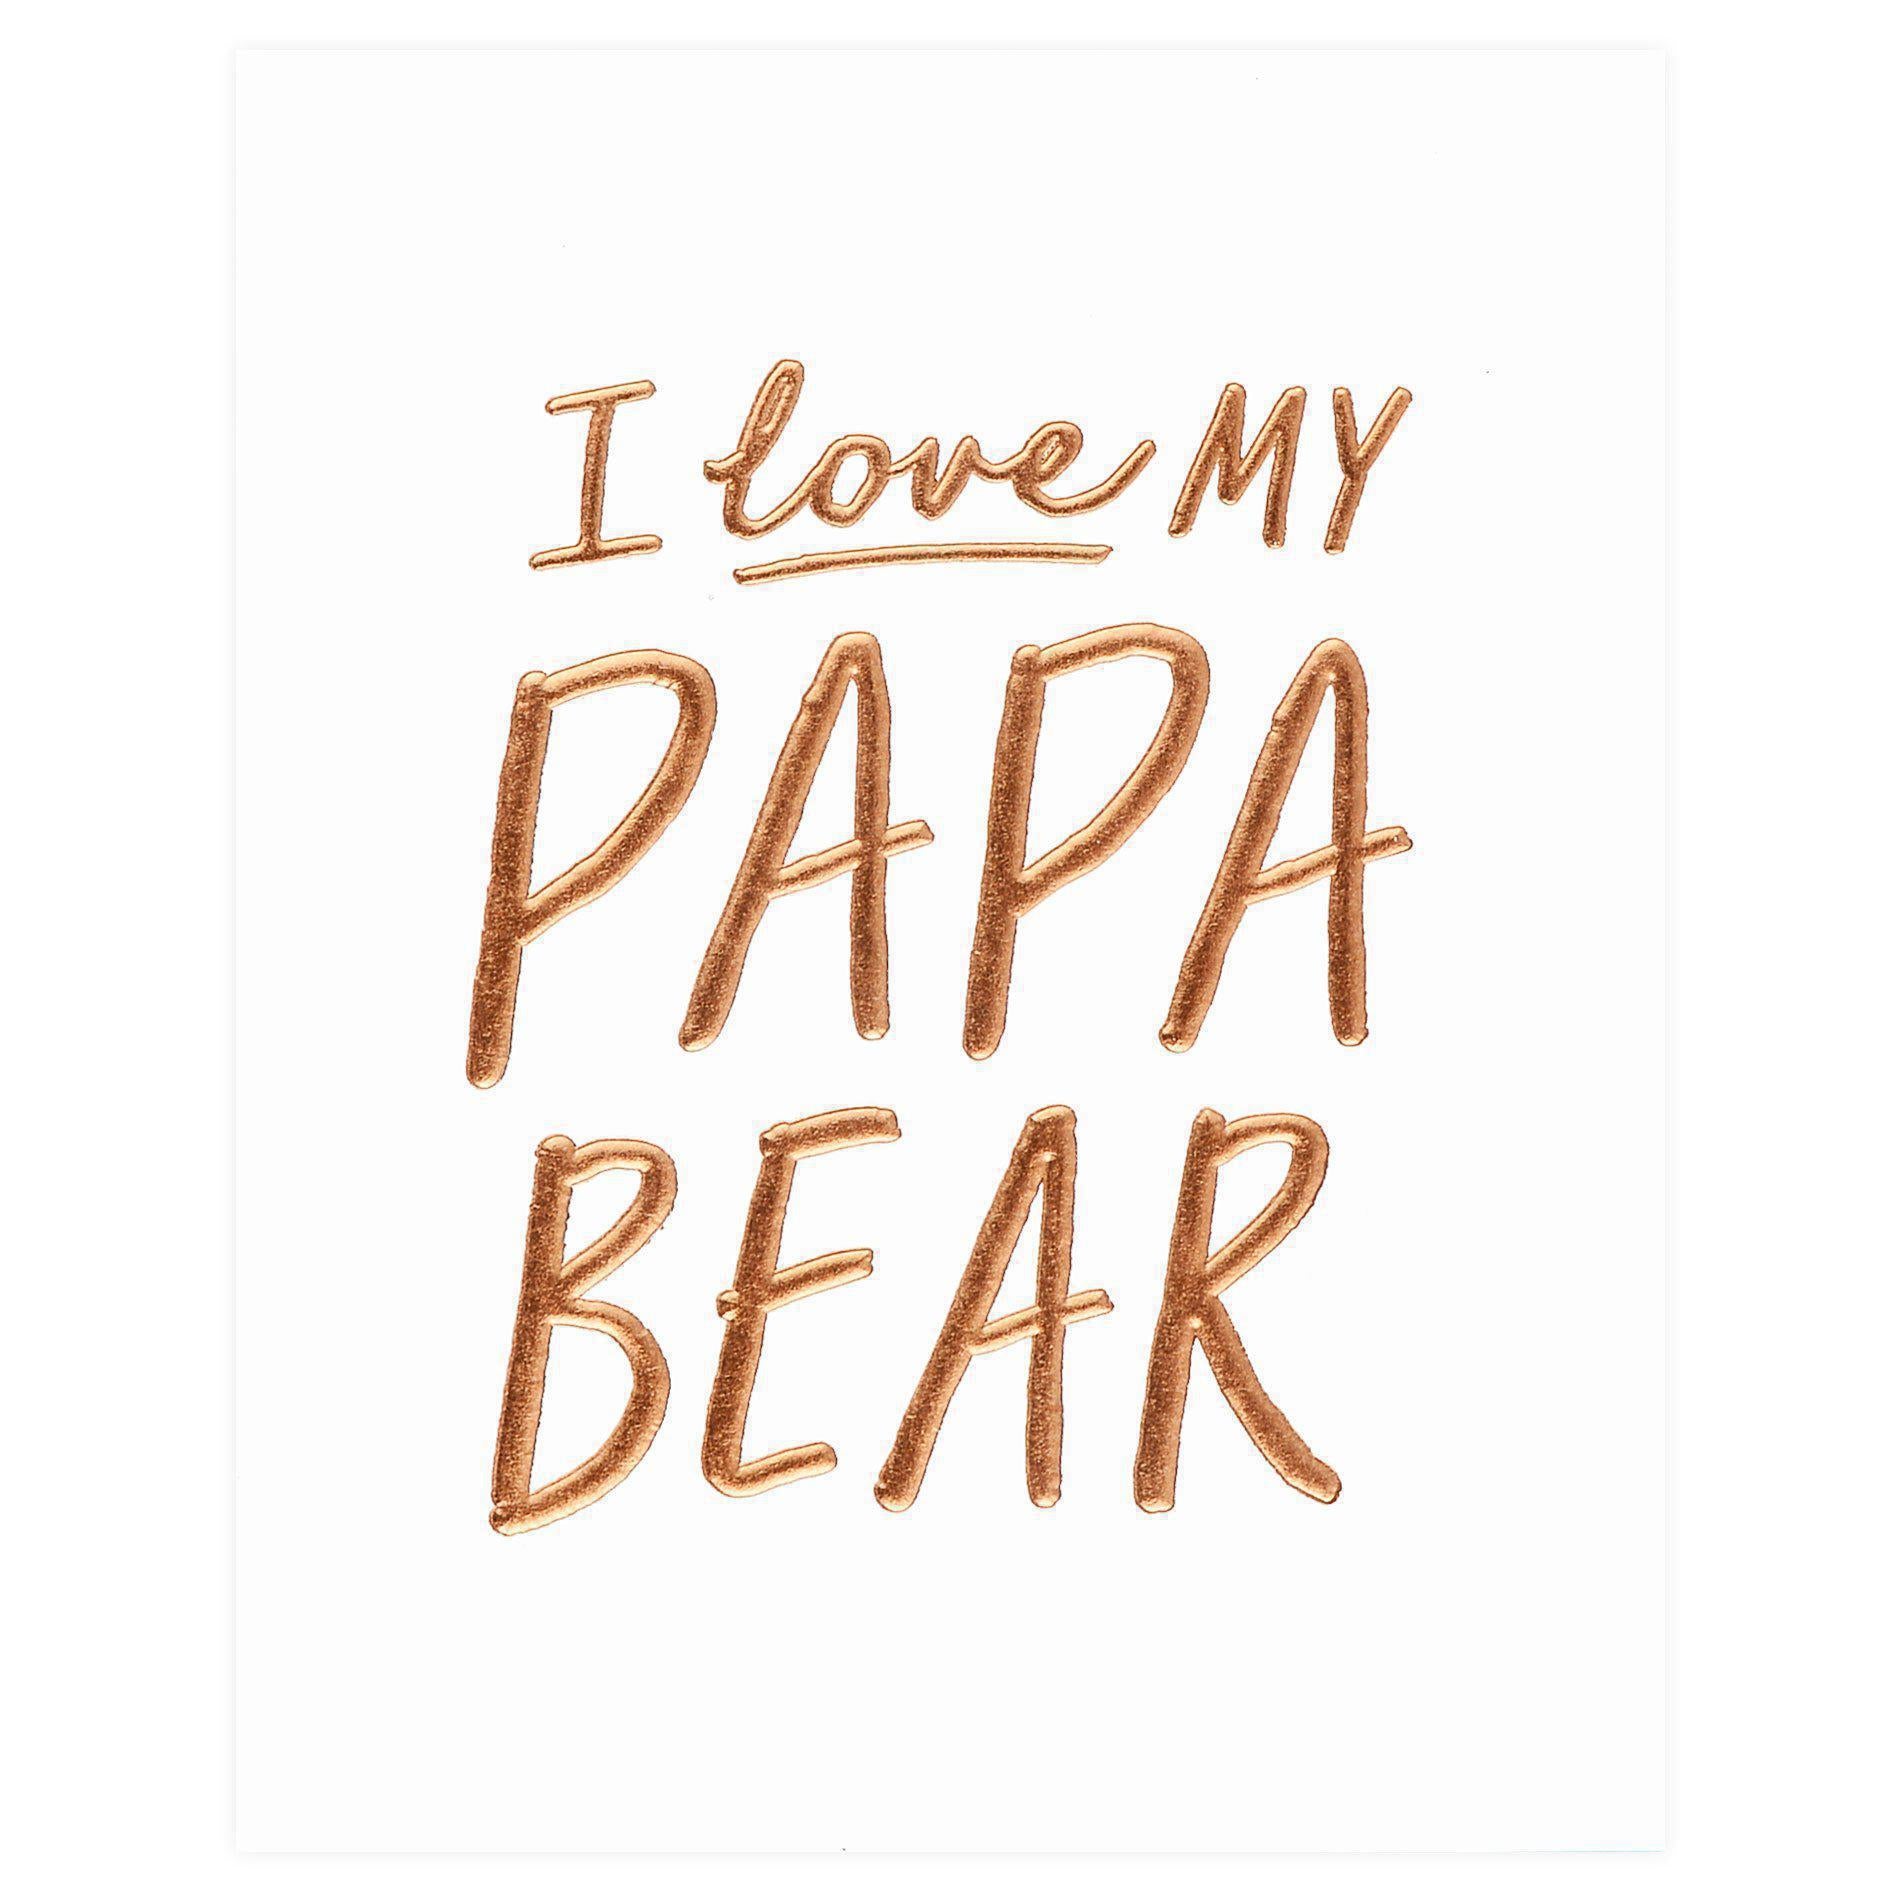 Papa Bear Card